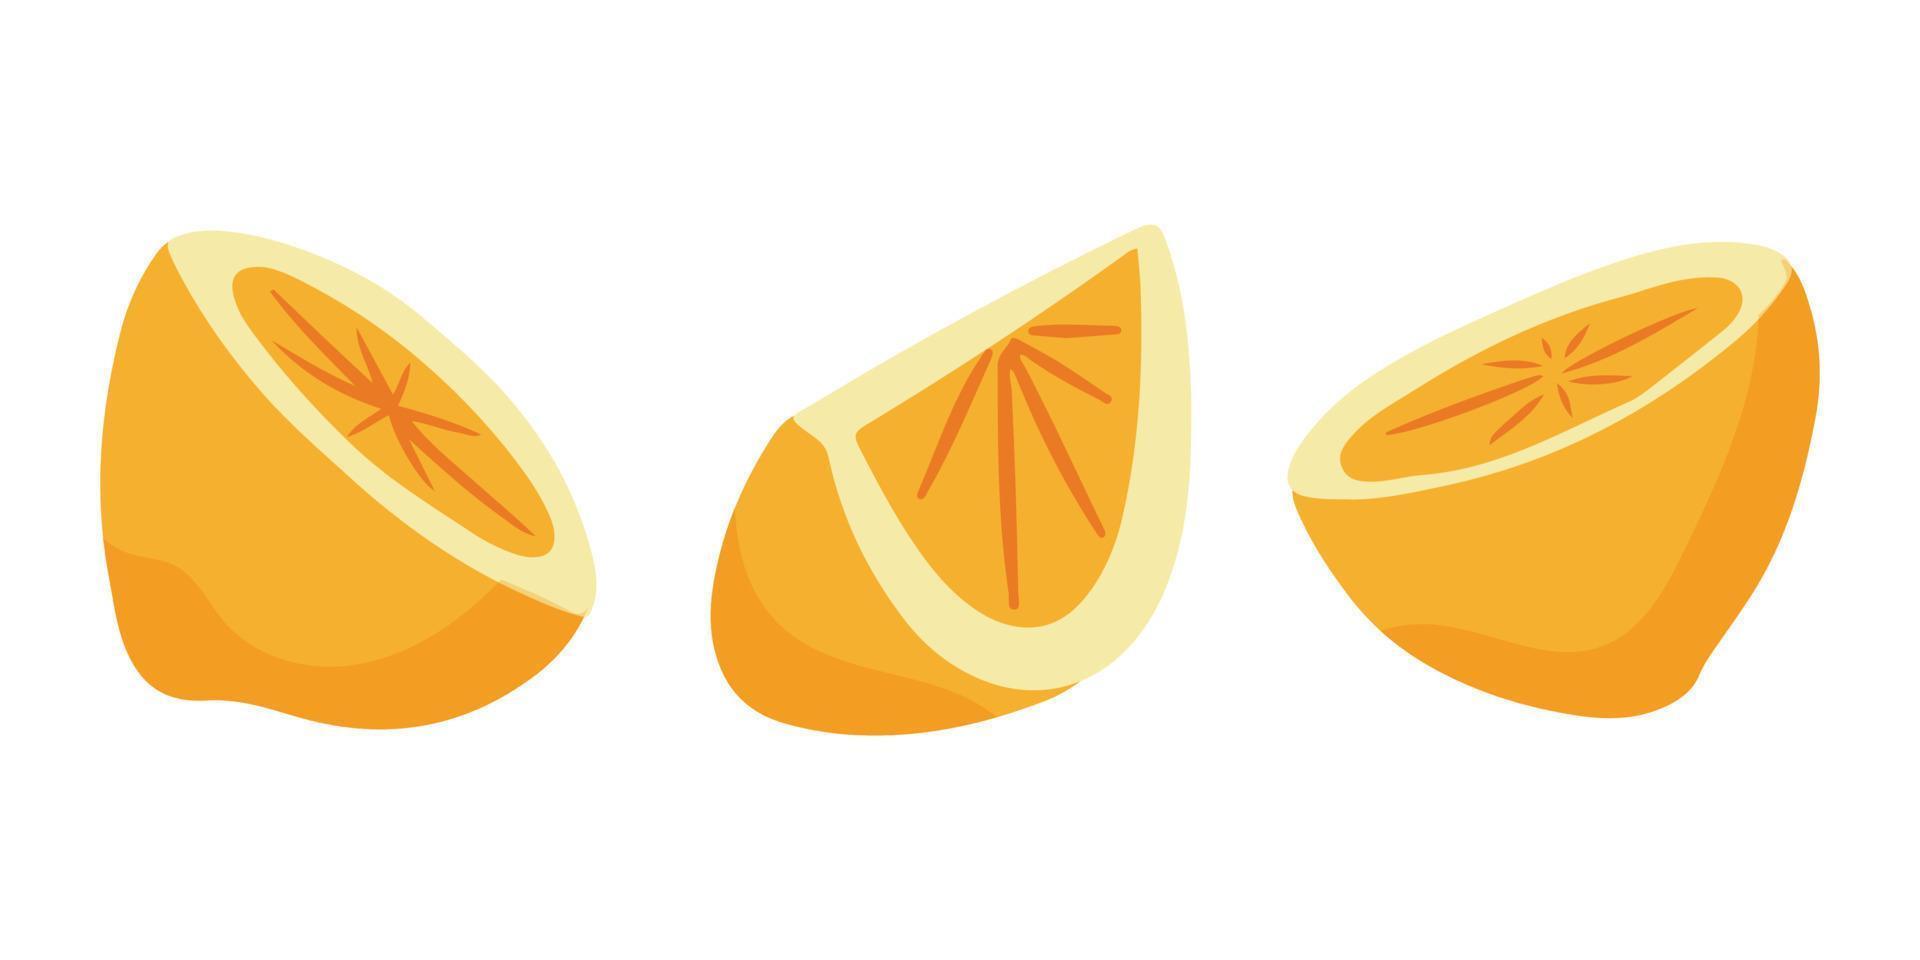 trozos de limón. ilustración vectorial de dibujos animados vector